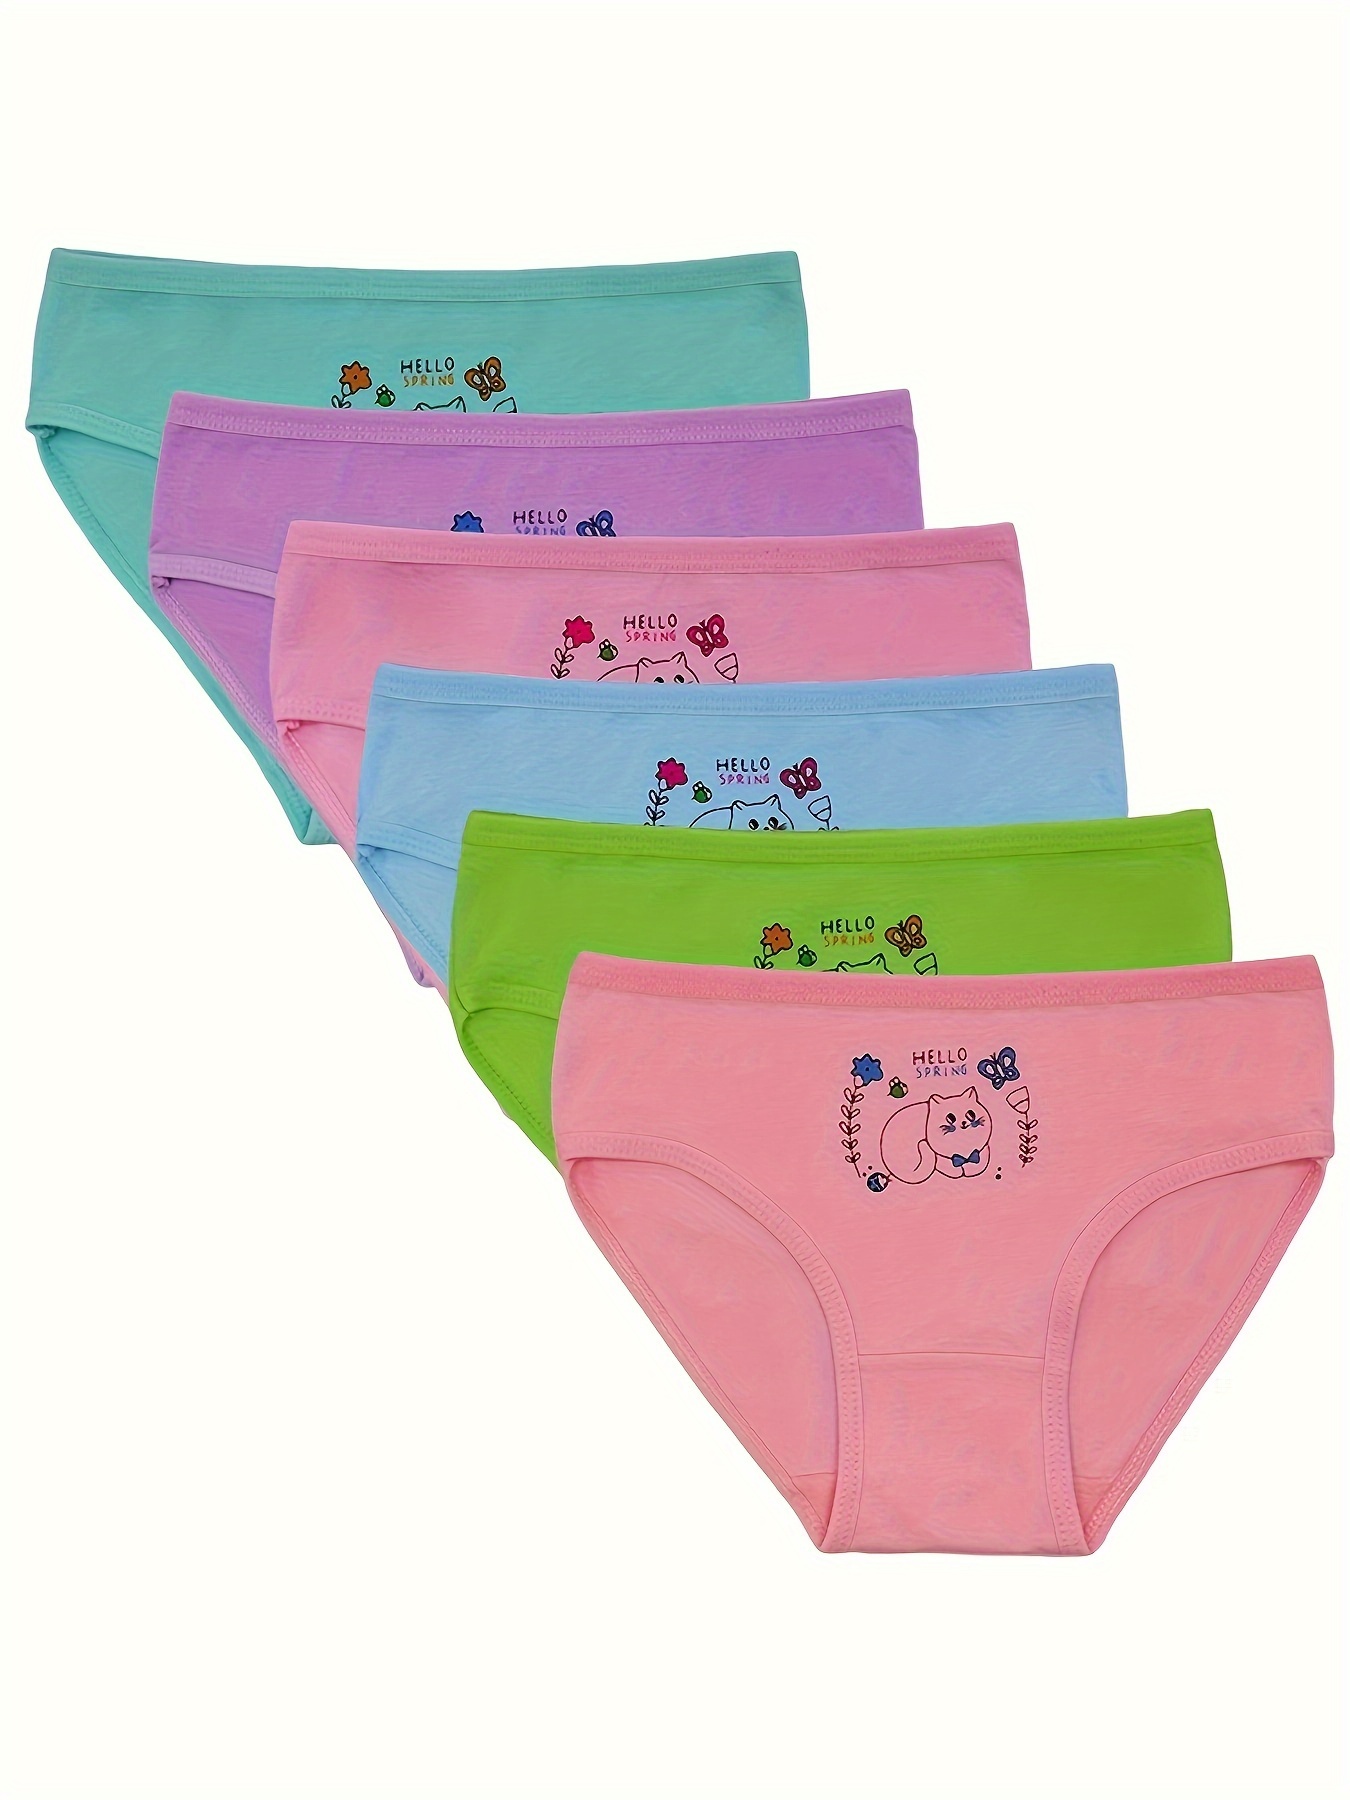 4pcs/Pack PAW Patrol Kid Girls Underwear Infant Cotton Panty